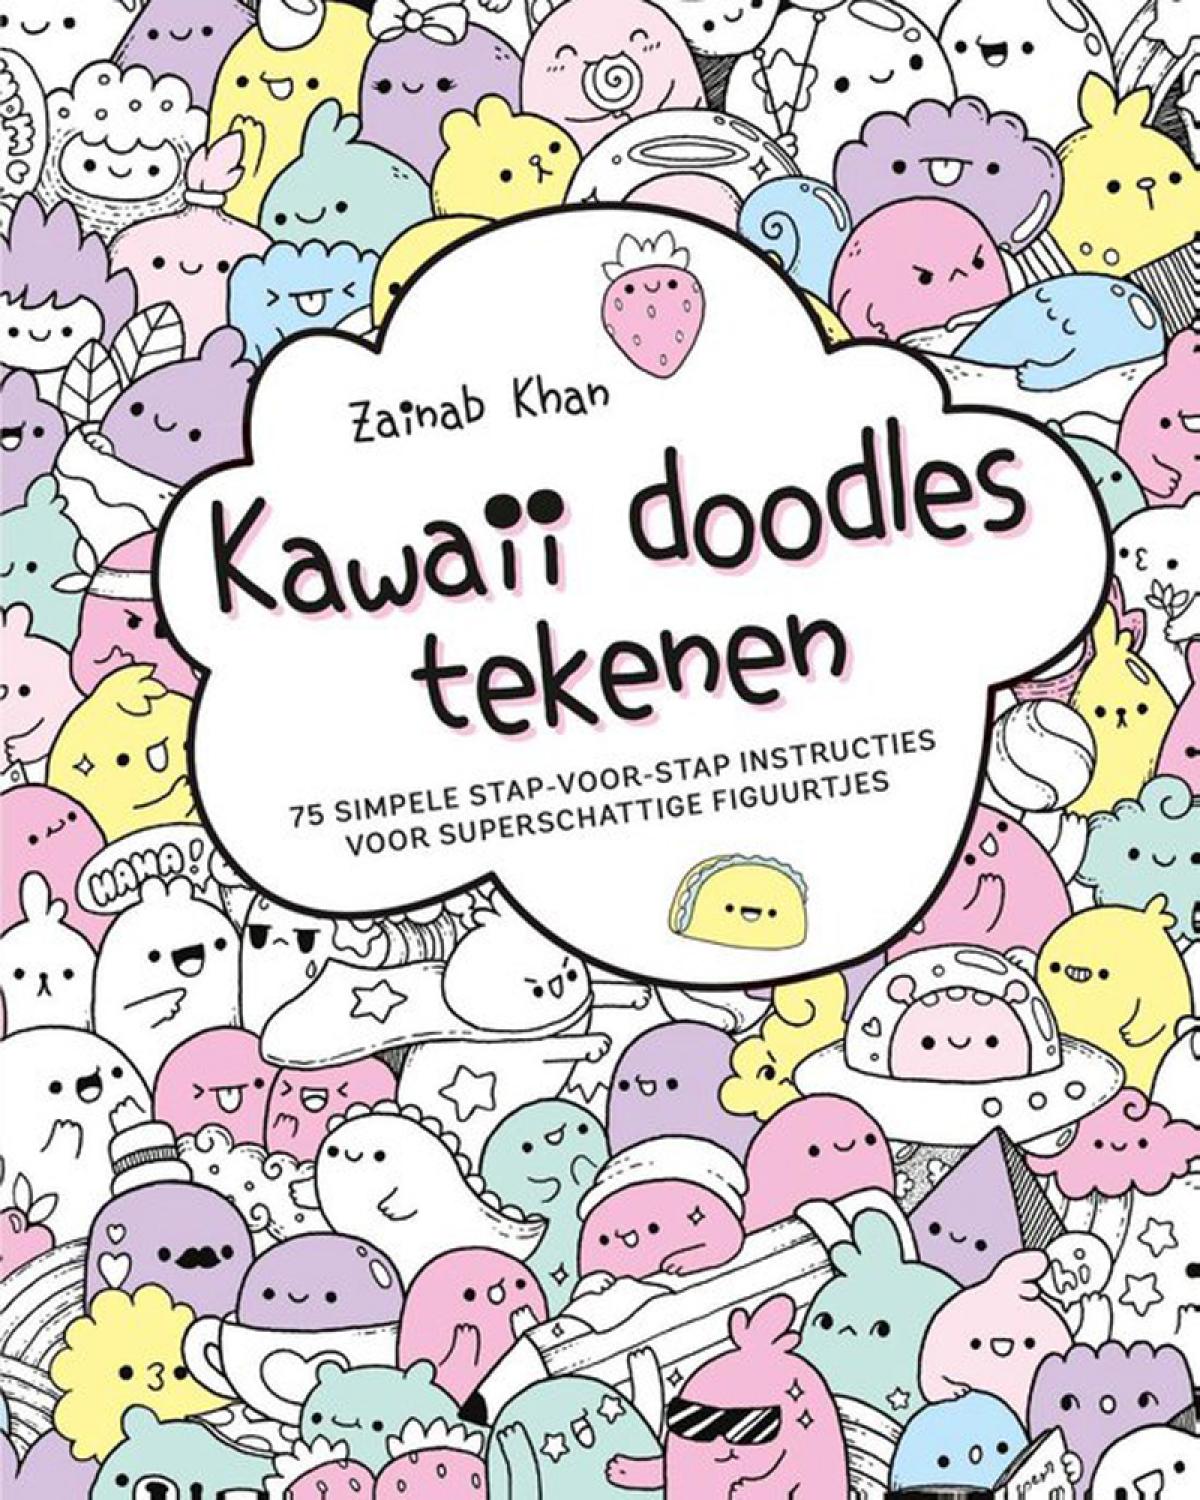 'Mini Kawaii doodles tekenen' van Zainab Khan